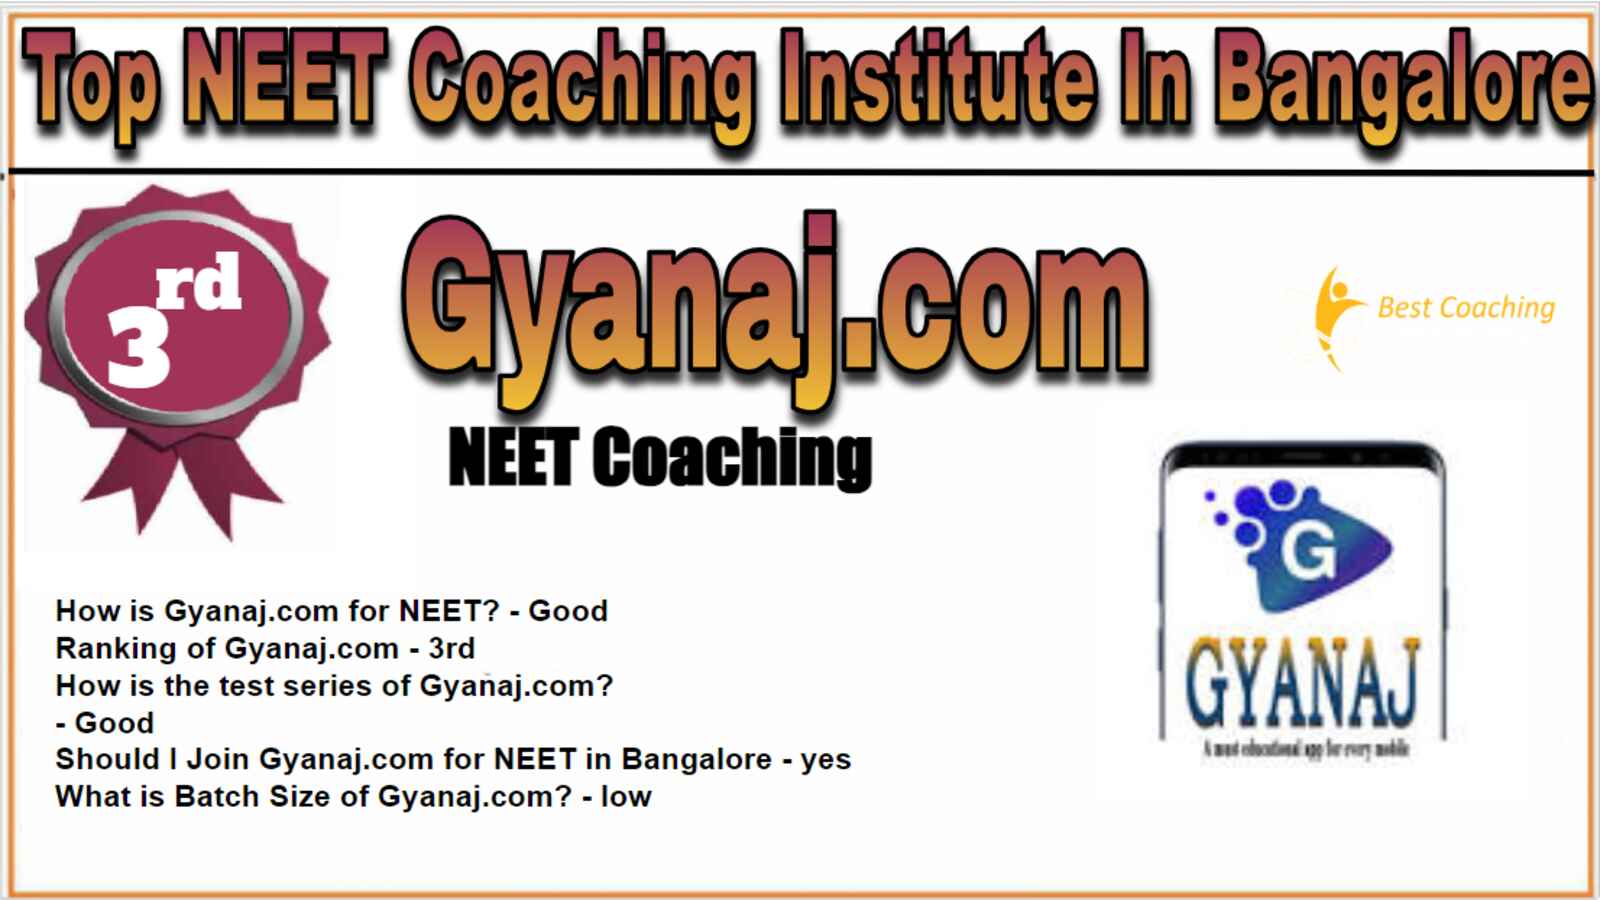 Rank 3 Best NEET Coaching institute in Bangalore